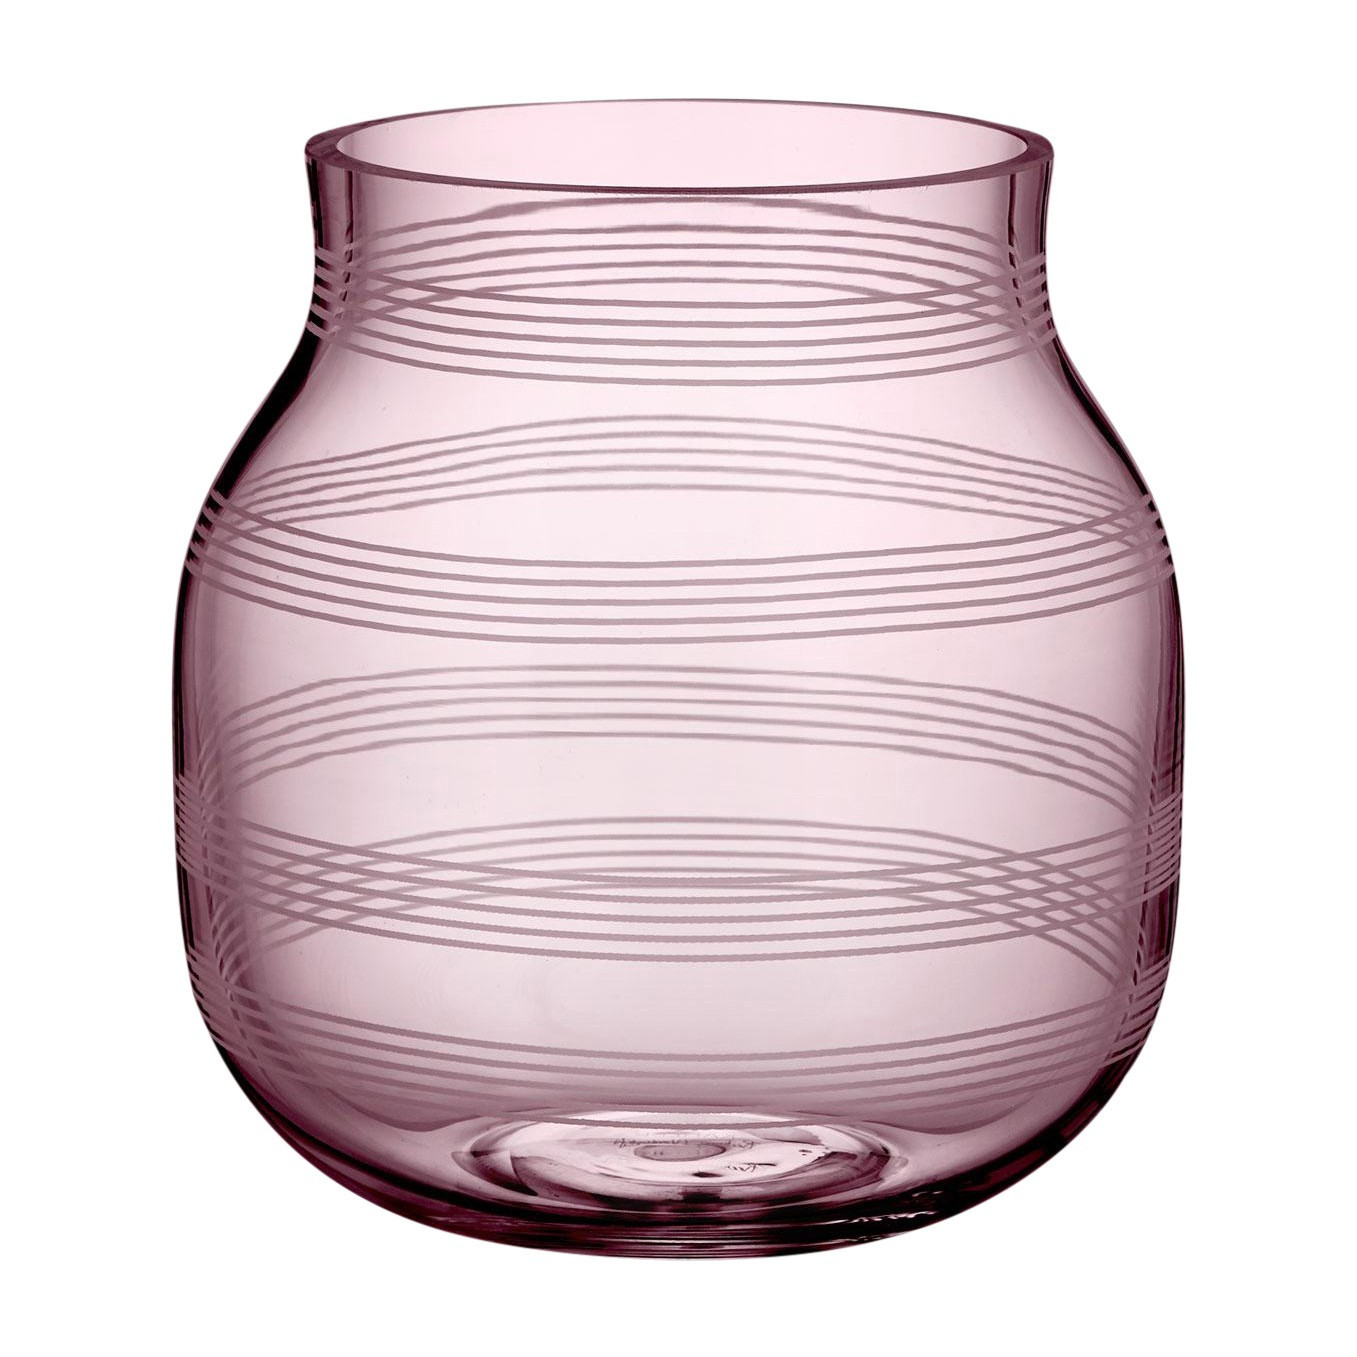 3 Glass Vases Of Ka¤hler Omaggio Glass Vase H 17cm Ambientedirect within Kaehler Omaggio Glasvase H 17cm 1357x1357 Id1922376 Cdd758e4260a859ee9db9bec5014a957